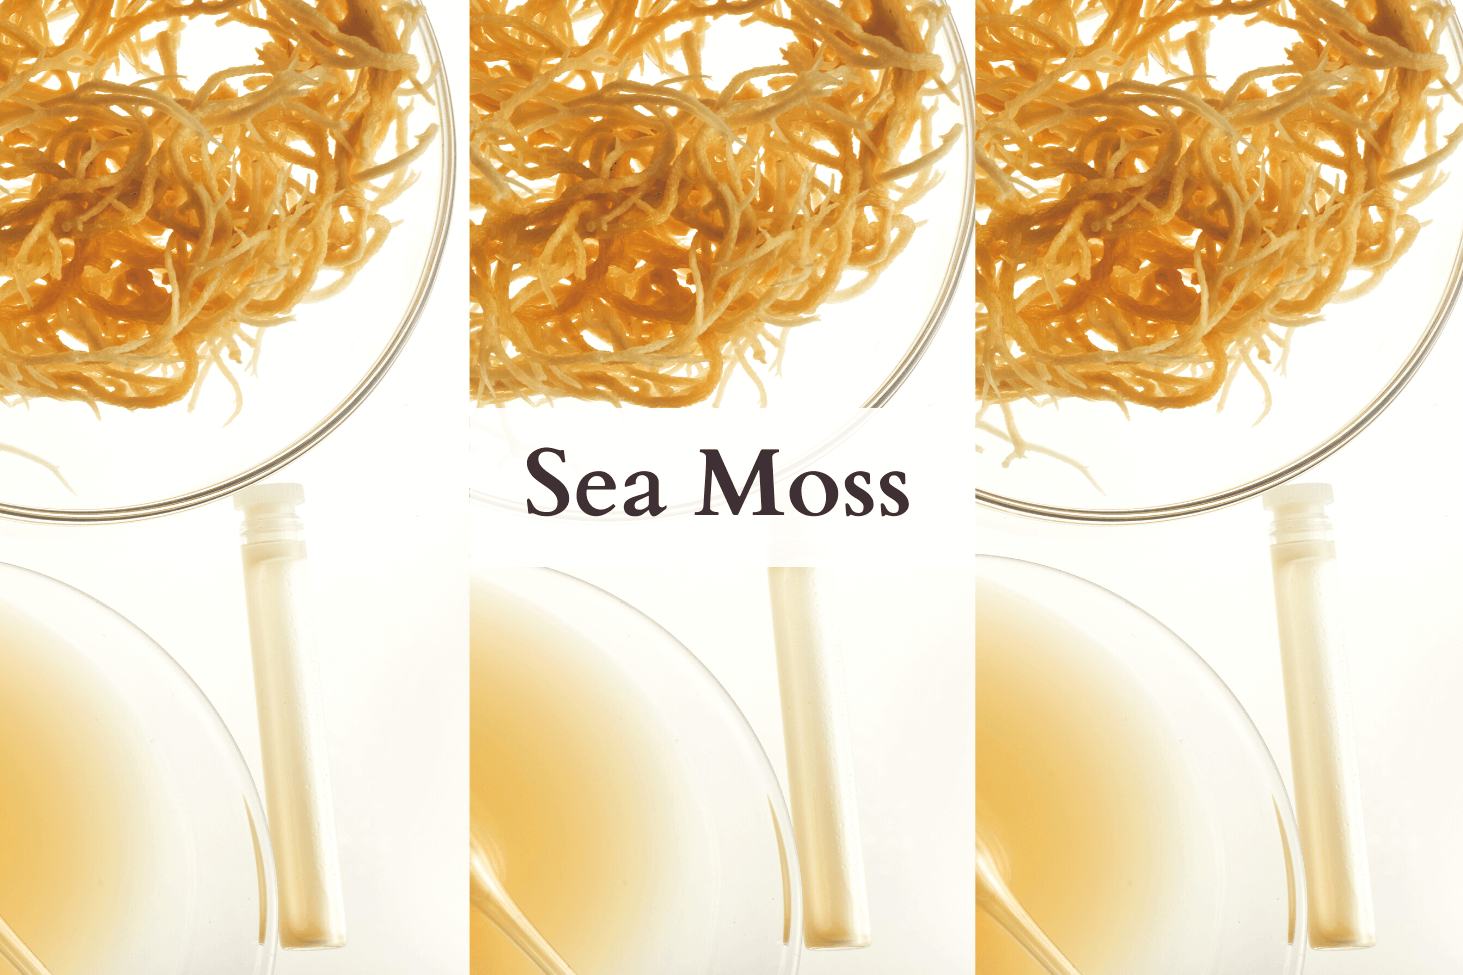 Is Sea Moss Healthy?